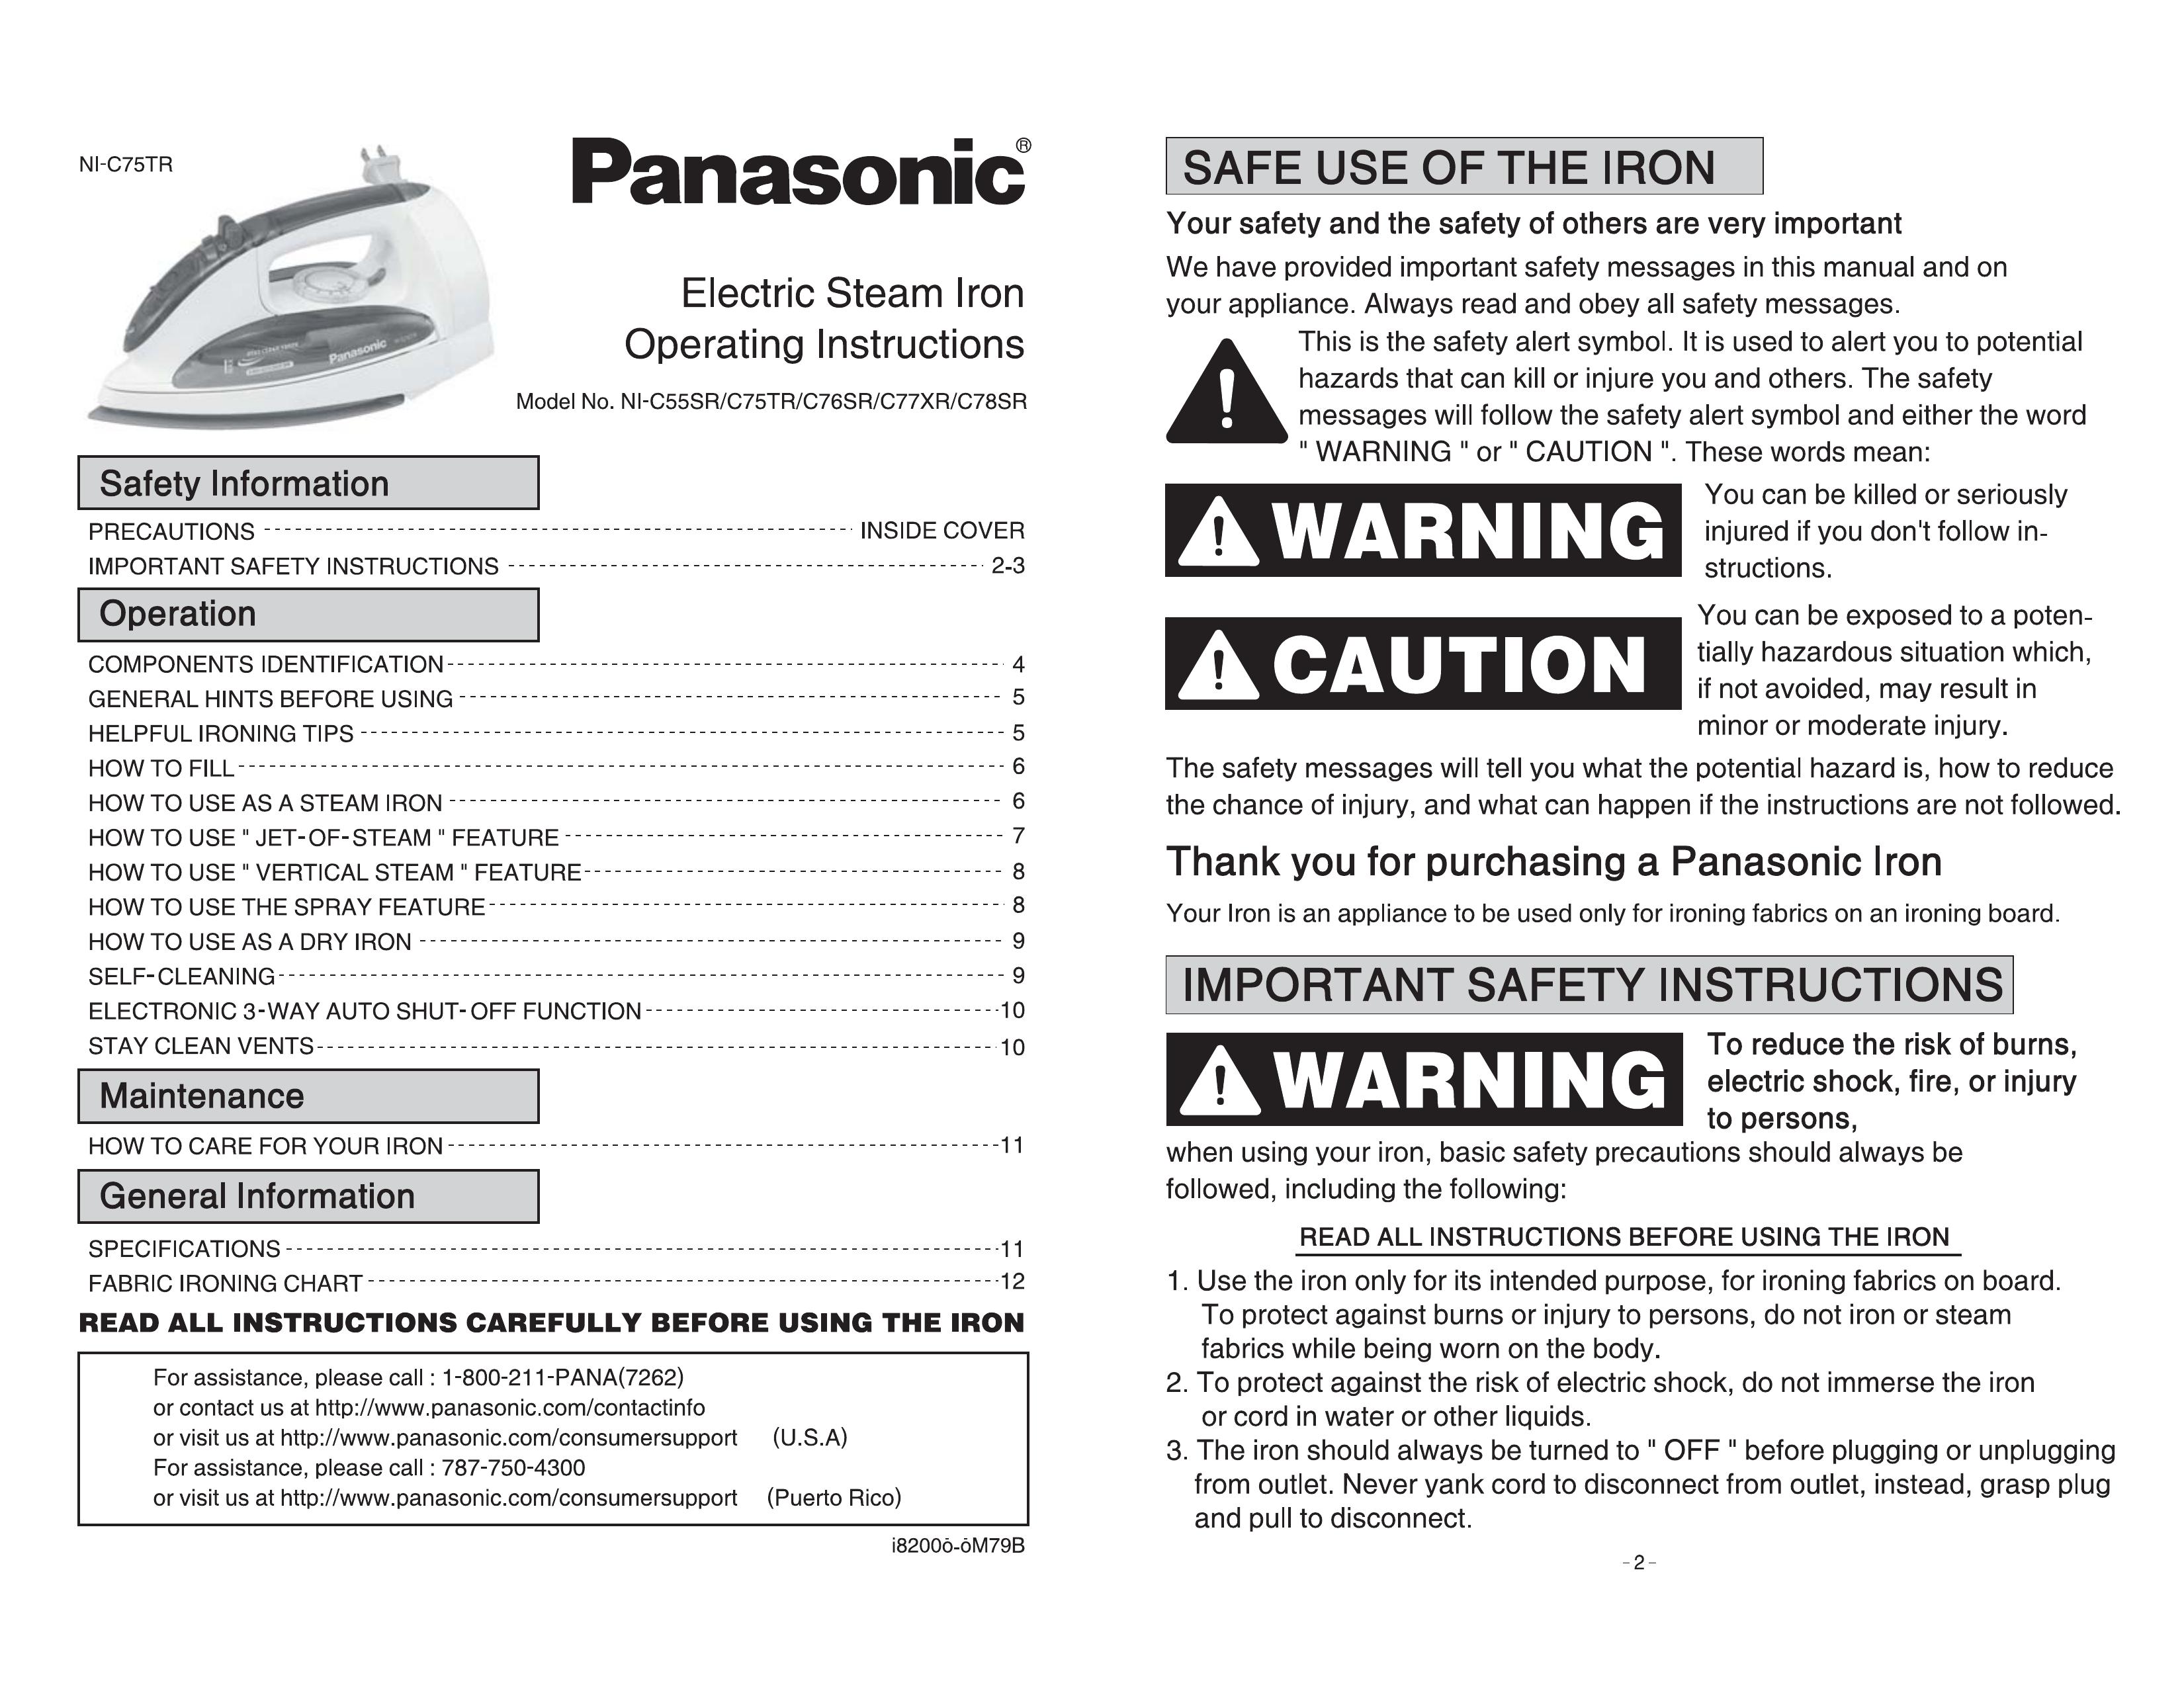 Panasonic NI-C55SR Iron User Manual